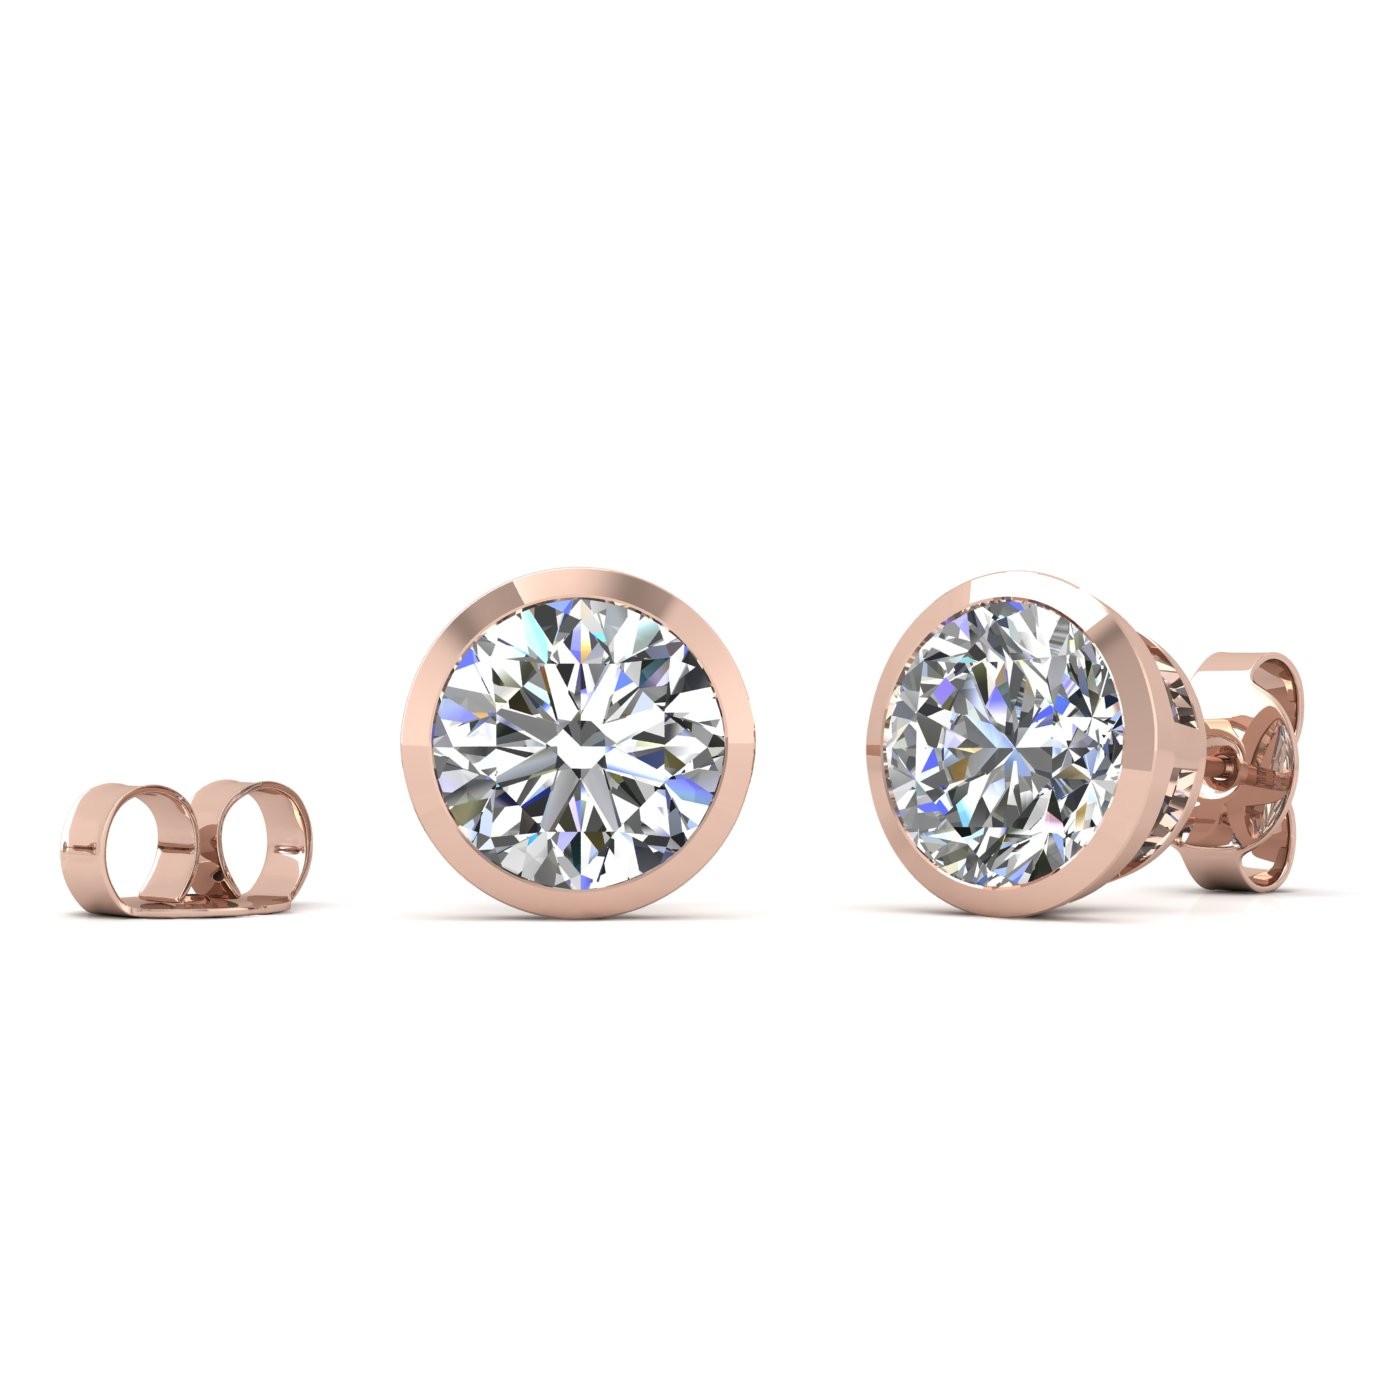 18k white gold 1.2 ct each (2,4 tcw) round brilliant cut diamond bezel set earring studs Photos & images